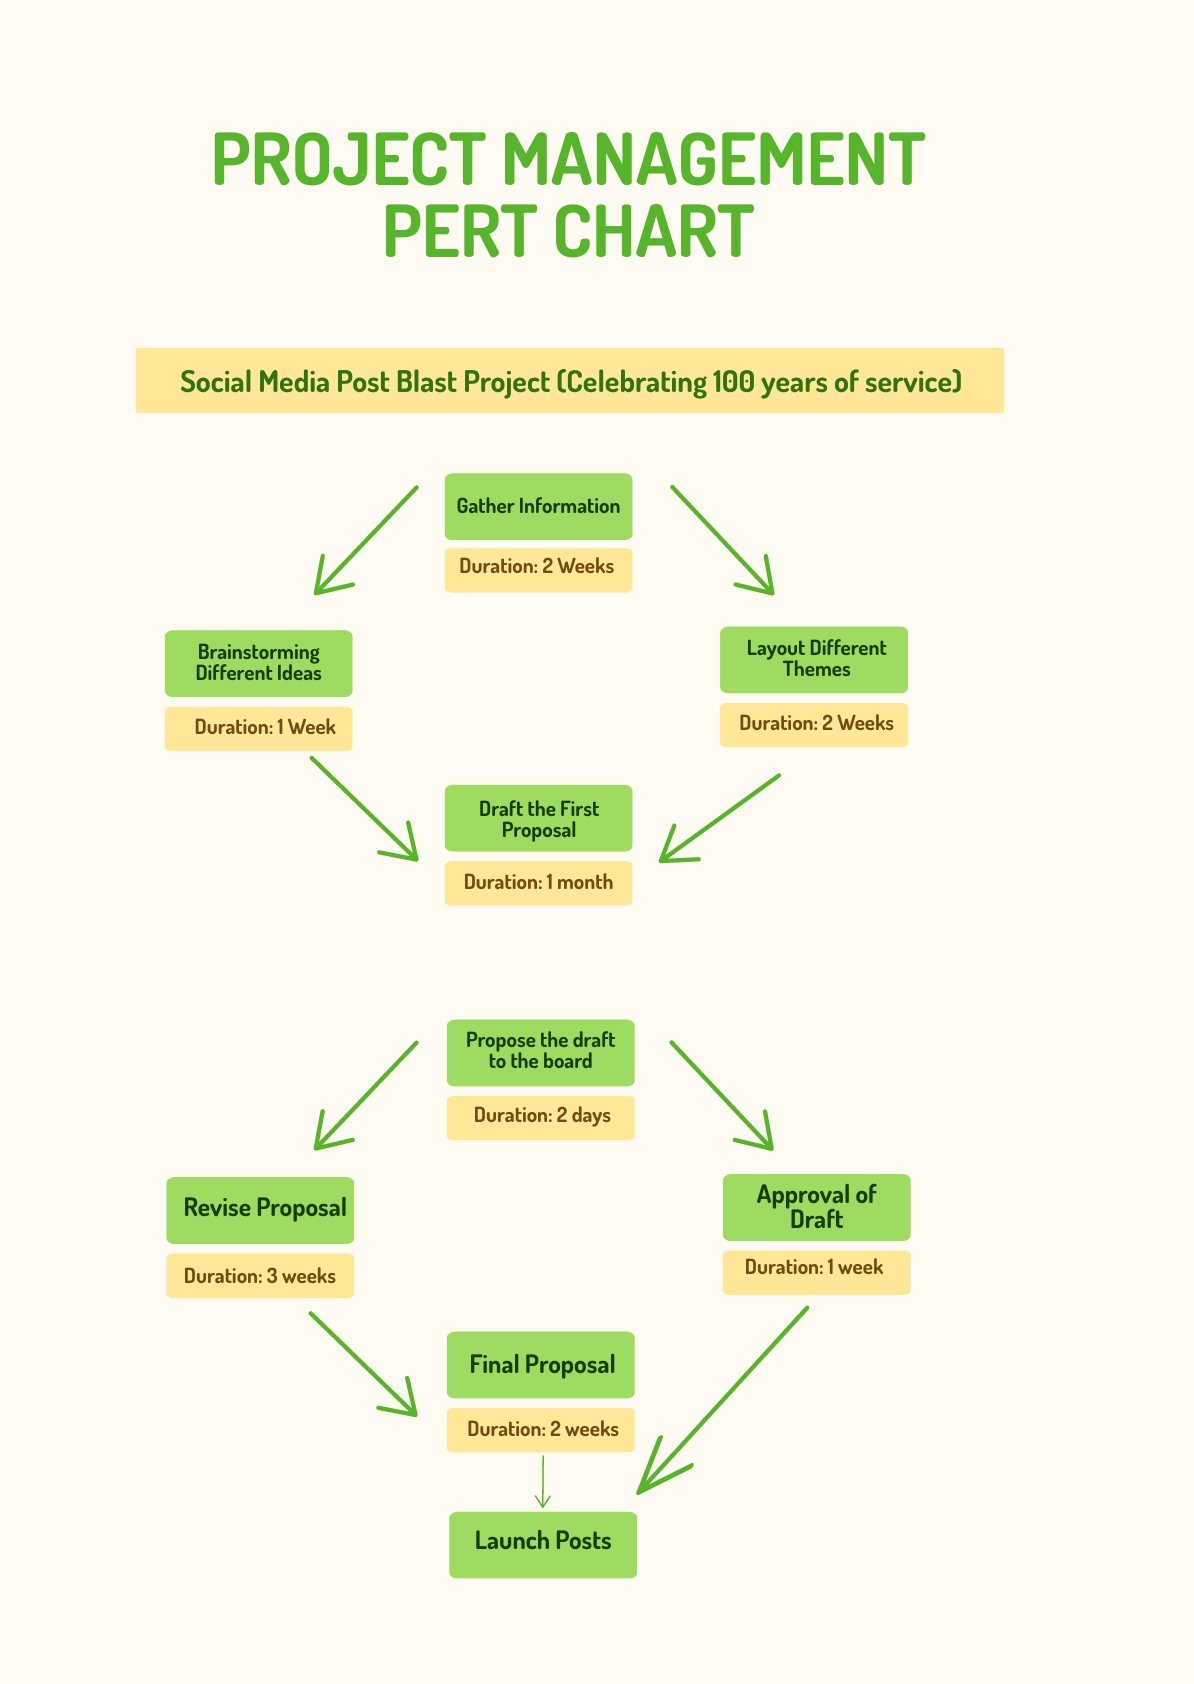 Project Management PERT Chart Template